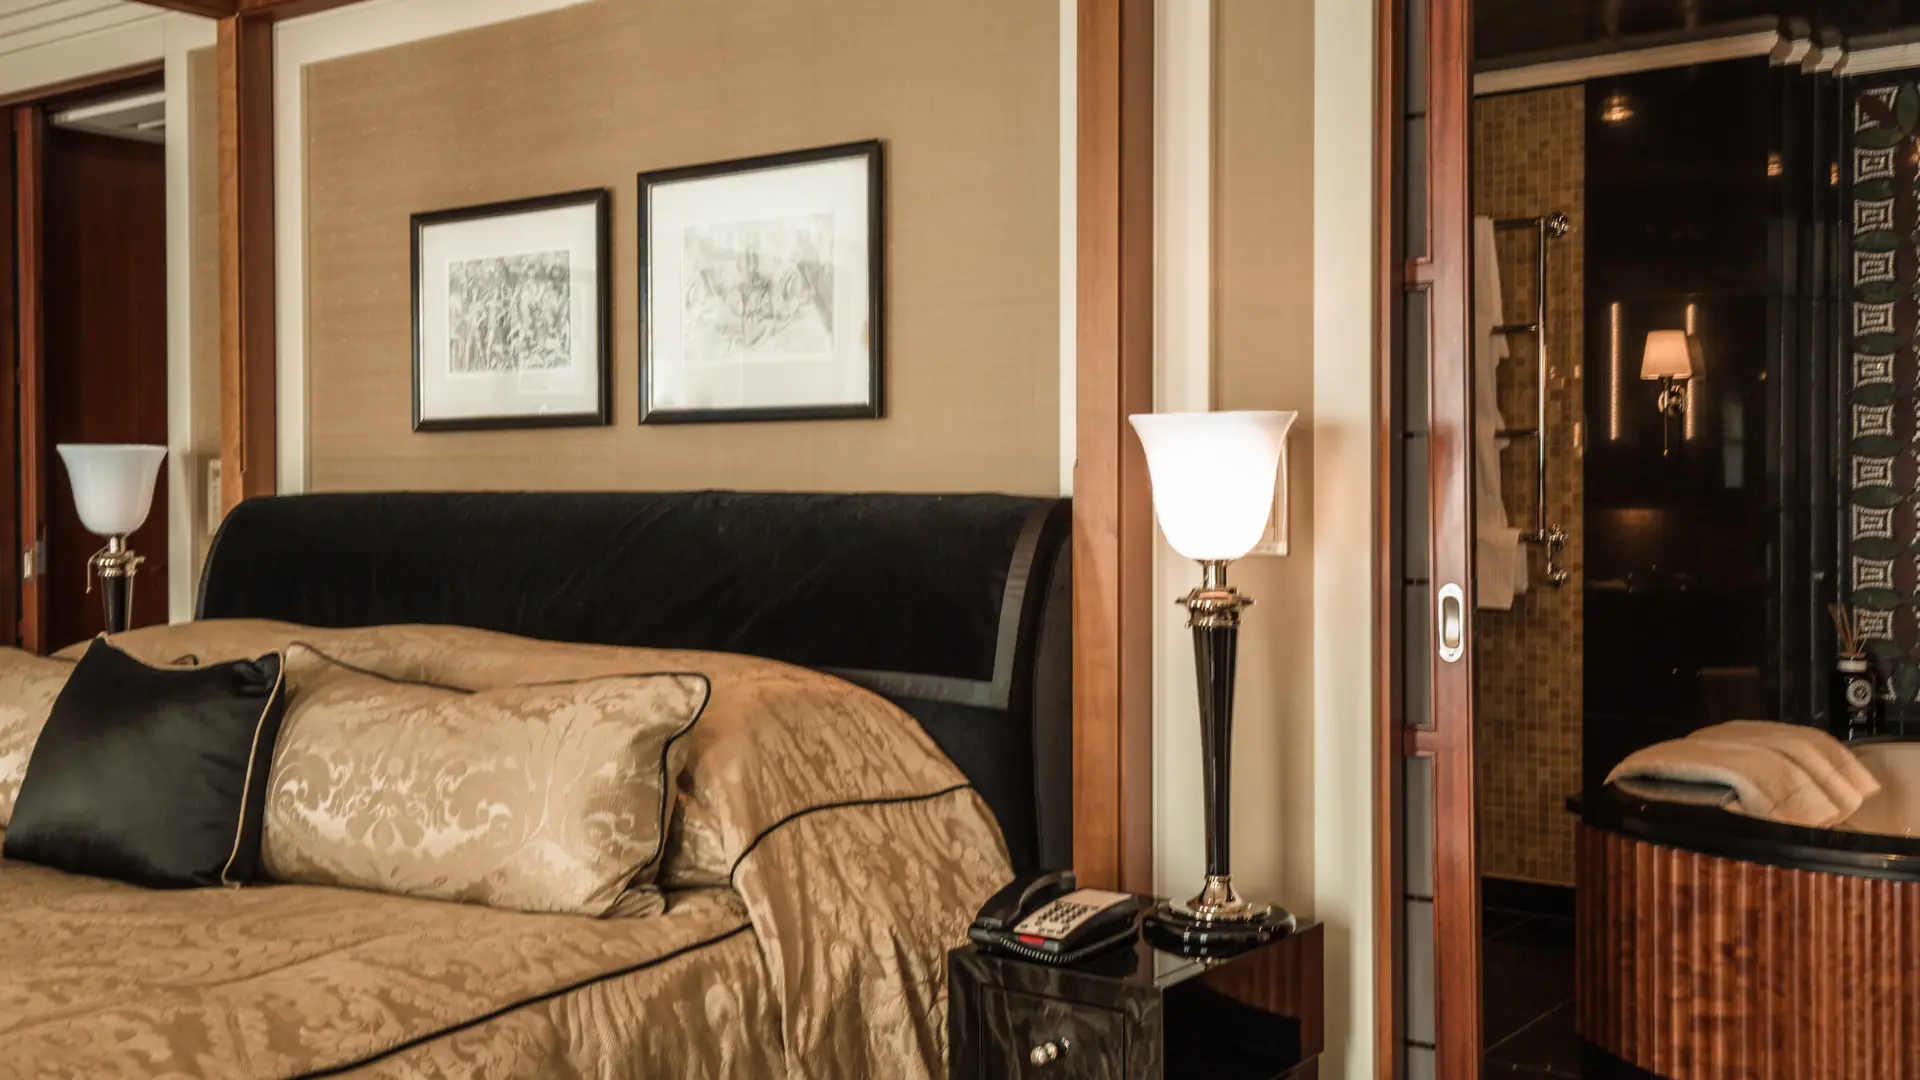 Hotel review Accommodation' - Hotel Adlon Kempinski Berlin - 2